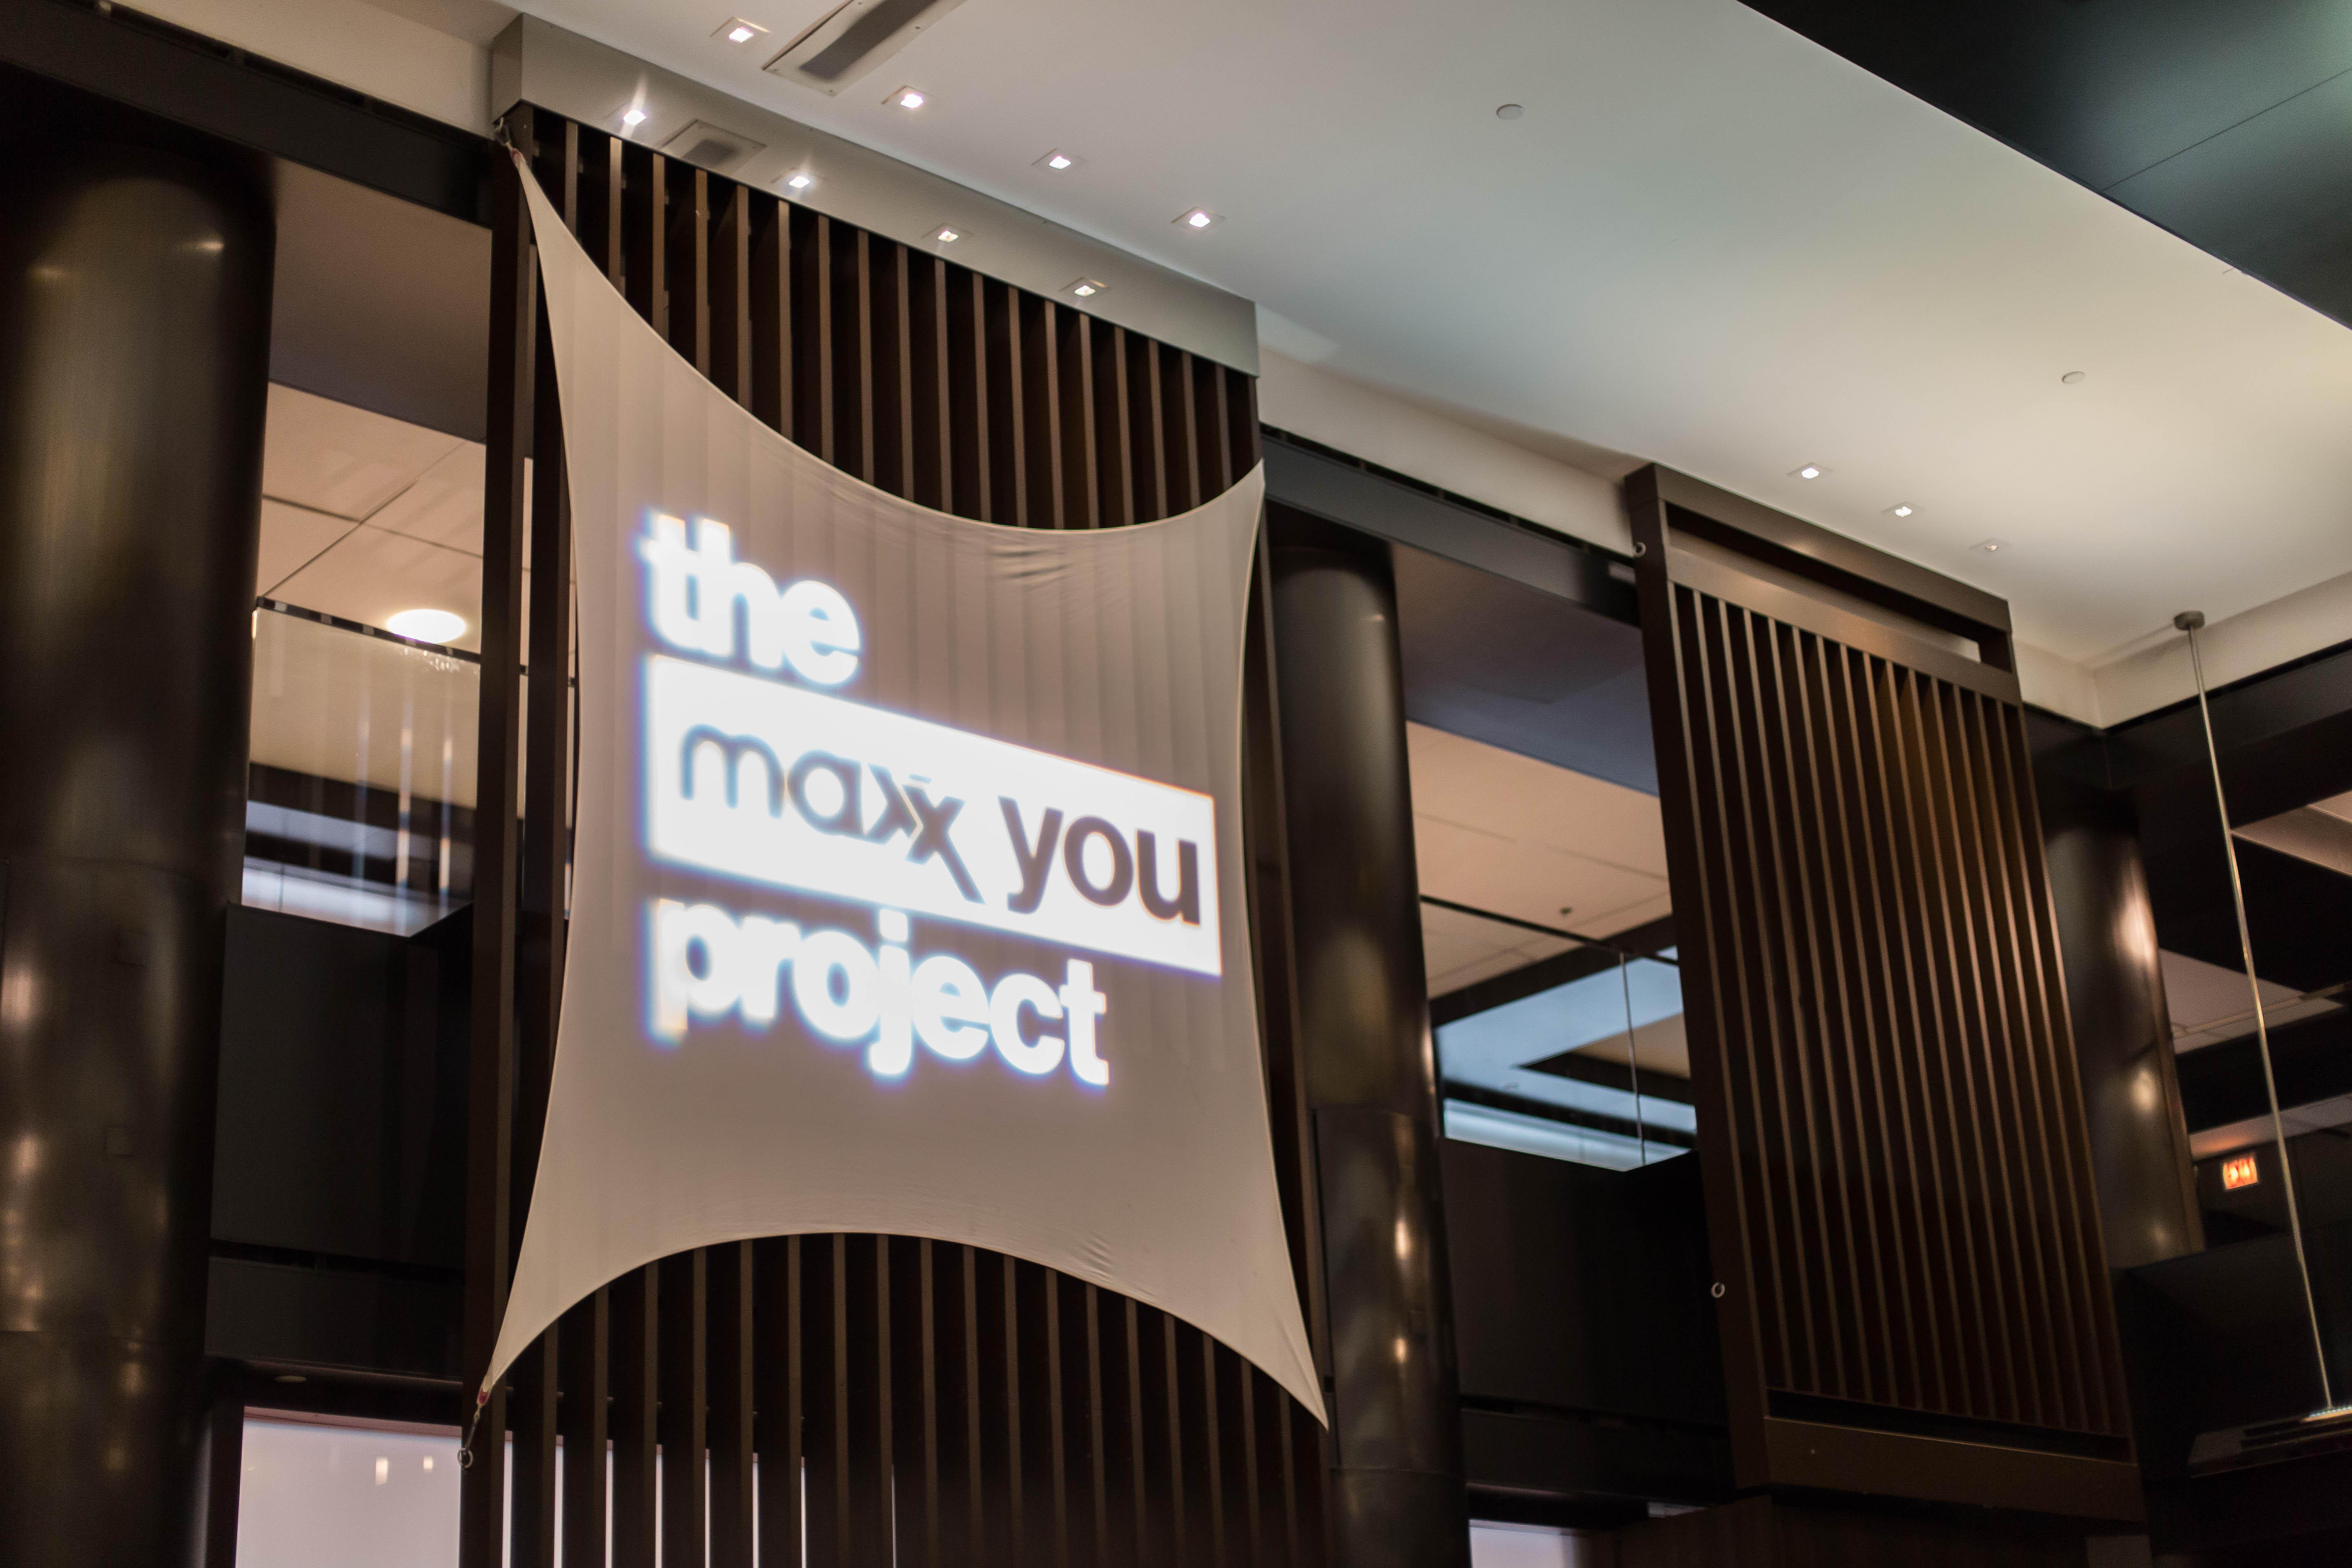 The Maxx You Project with T.J. Maxx | New York City – Haute Khuuture Blog